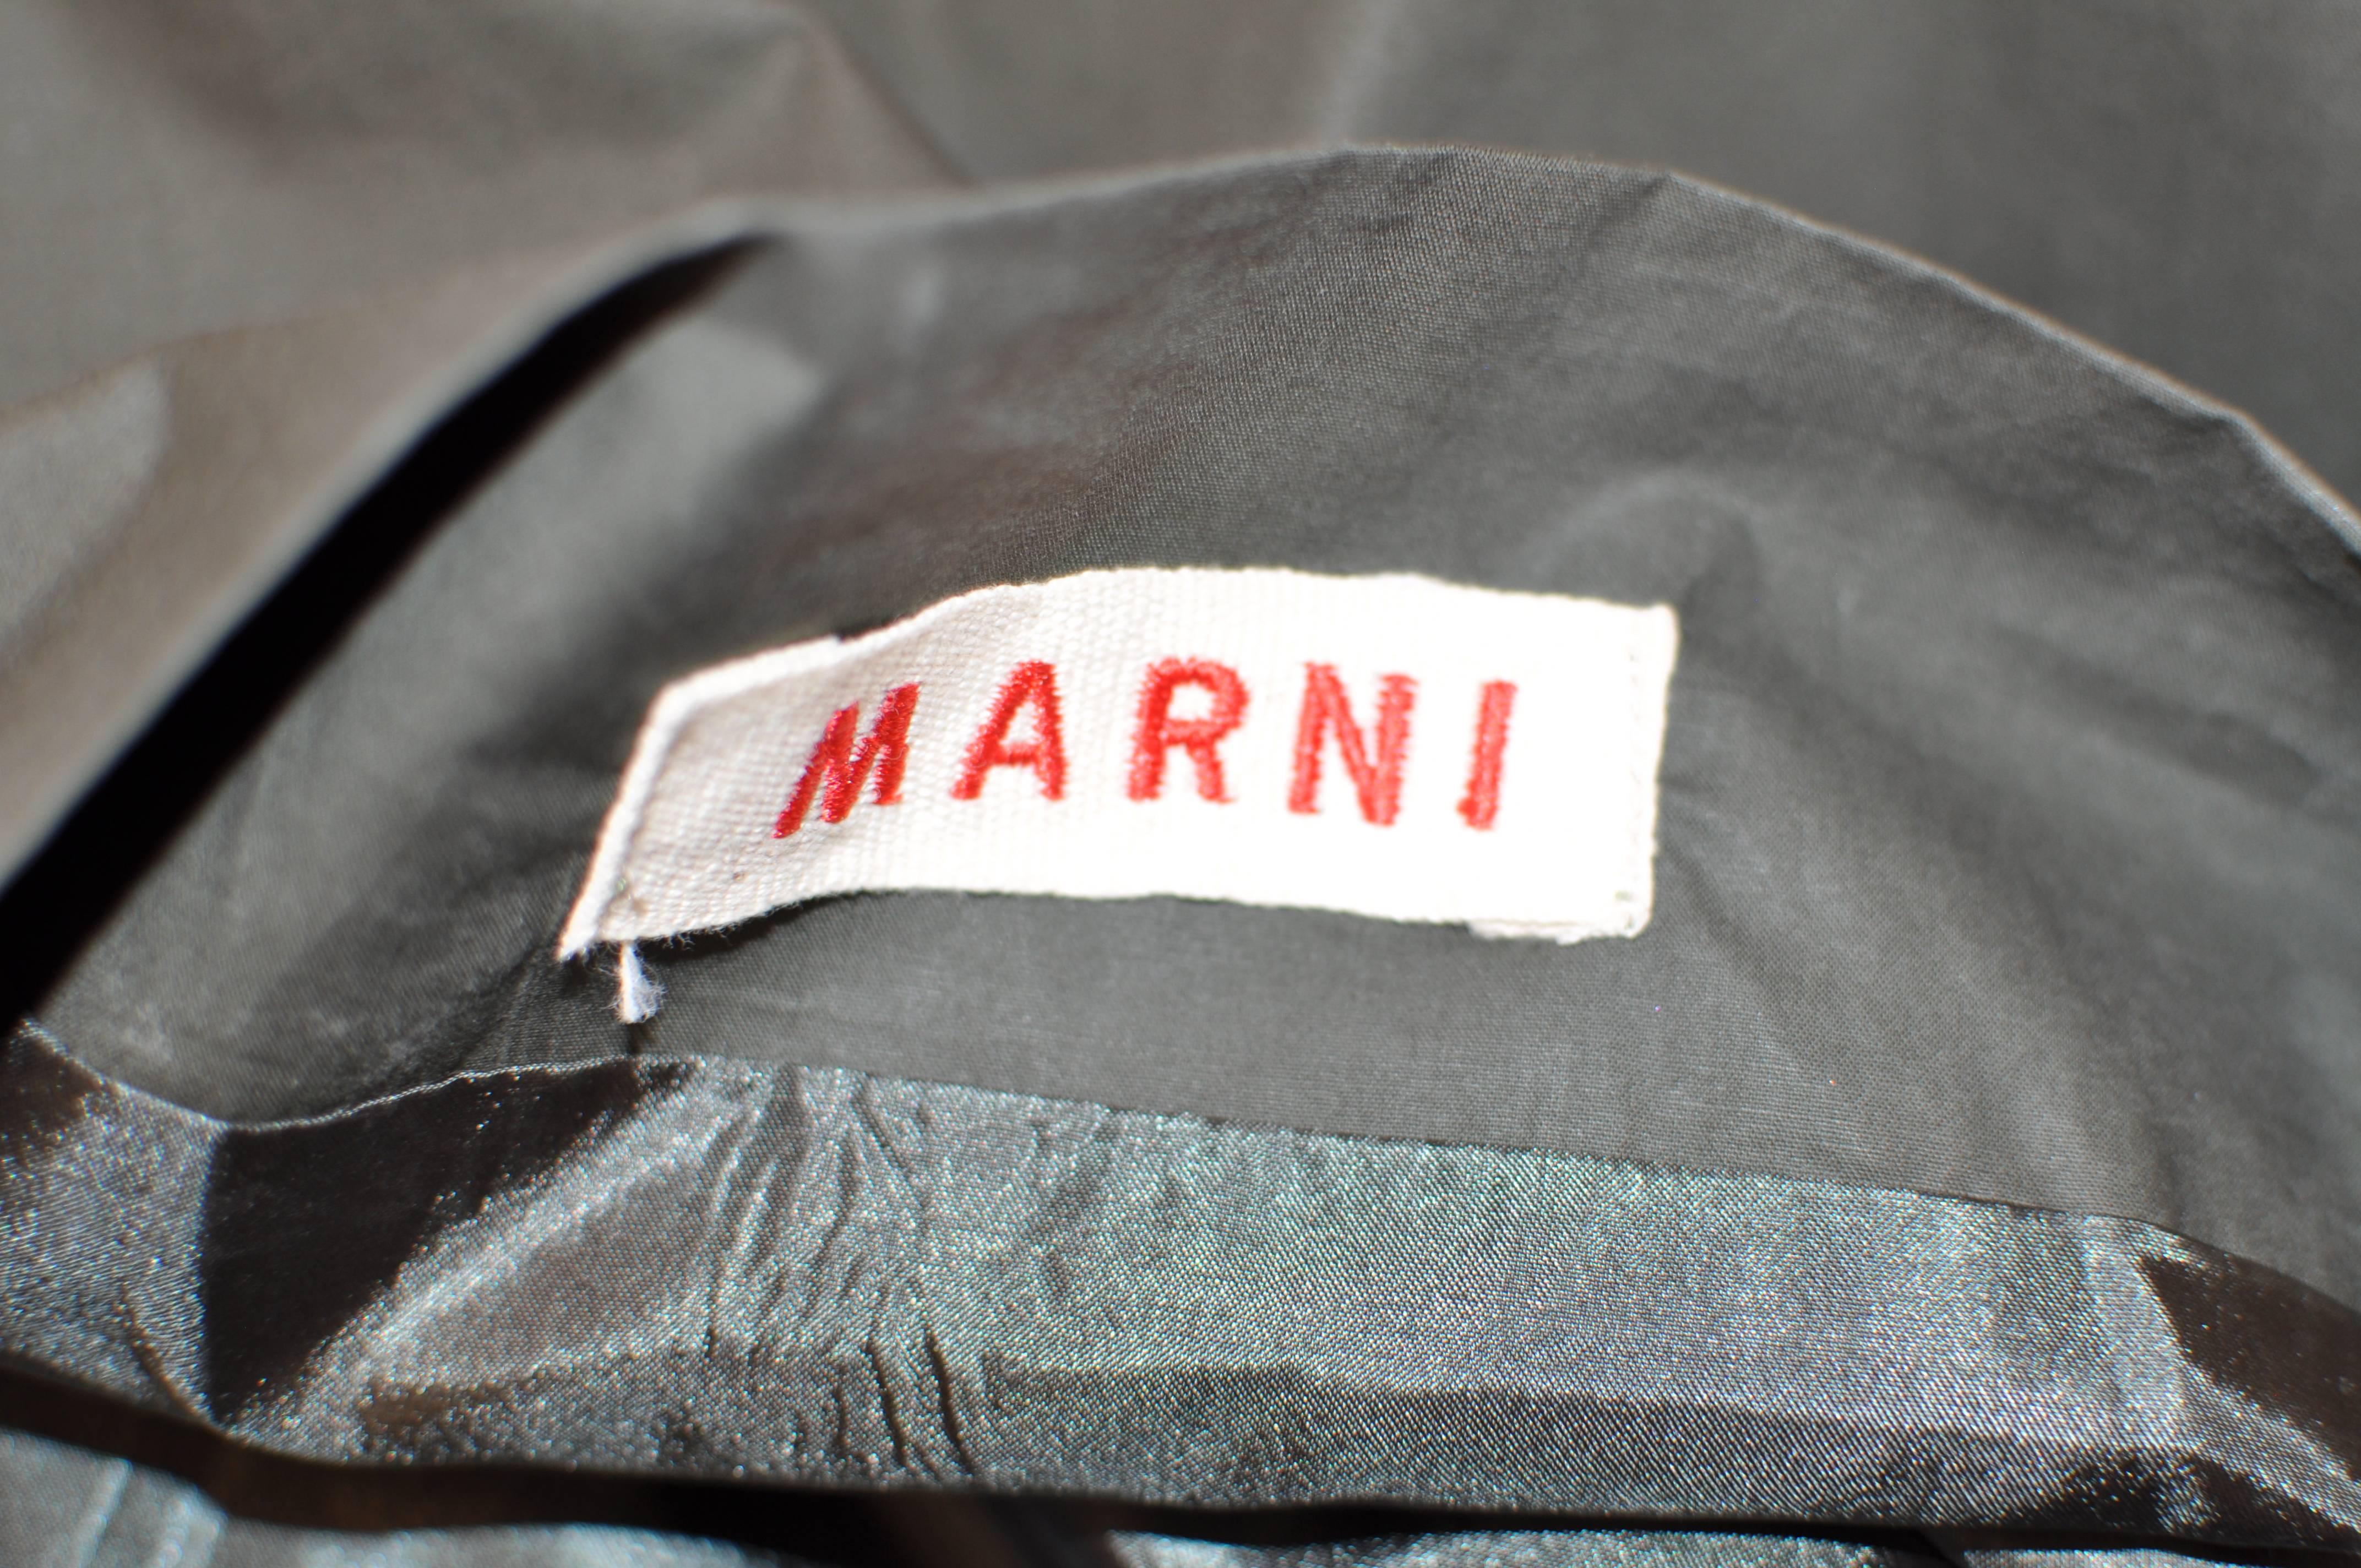 Black Marni Two-Tone 100% Cotton Dress 38 (Italian)